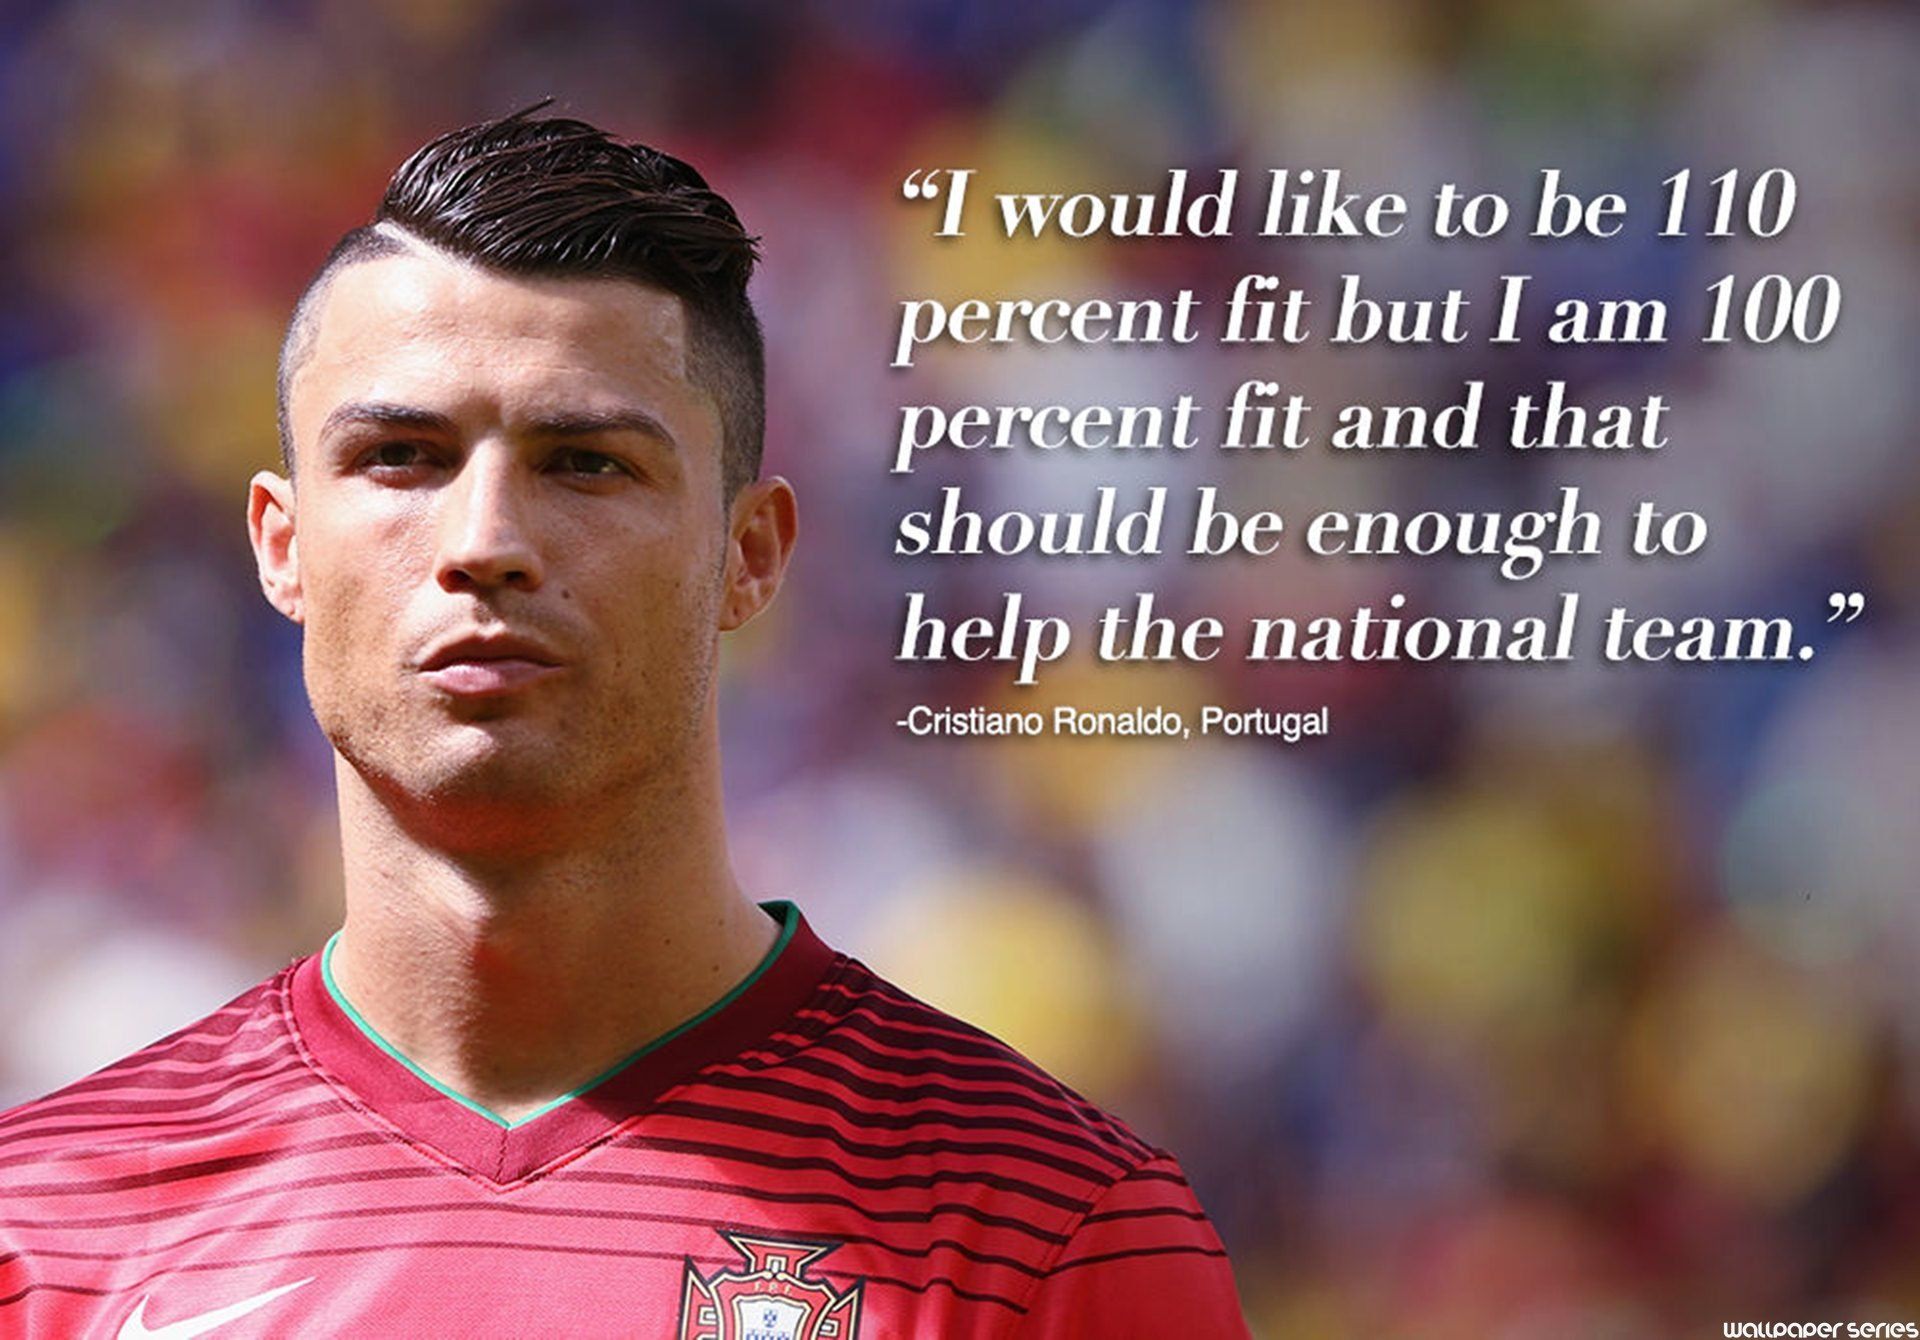 Cristiano Ronaldo Quotes About Life In Spanish. QuotesGram